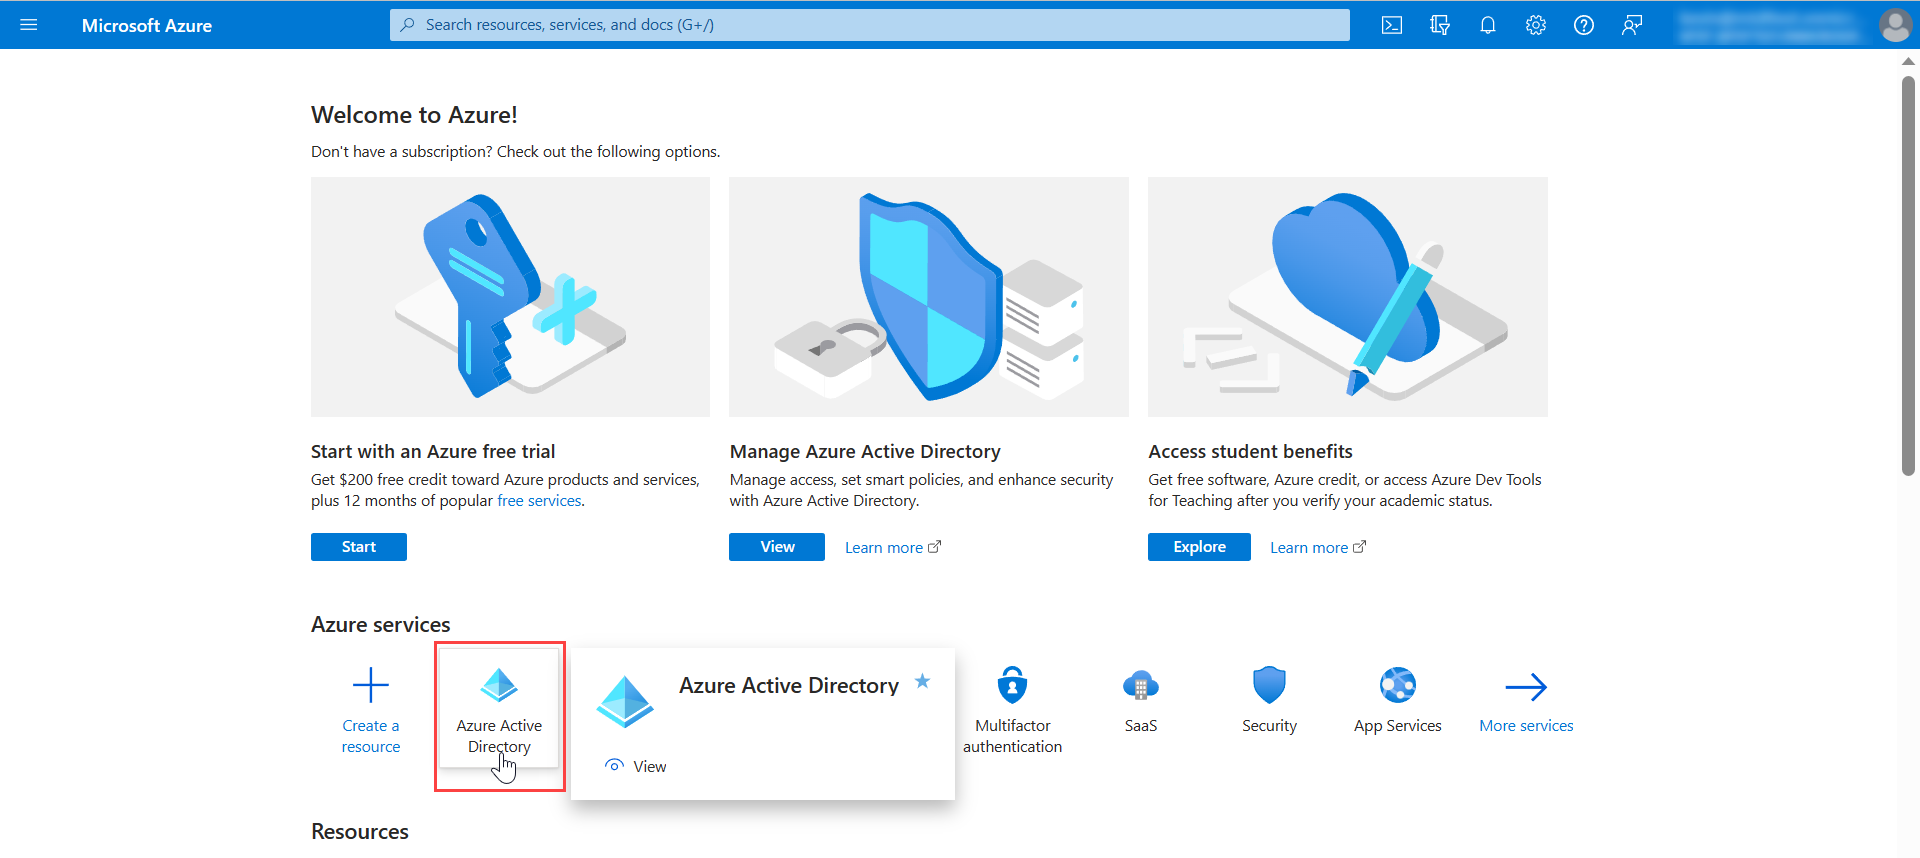 Microsoft Azure Portal Home page